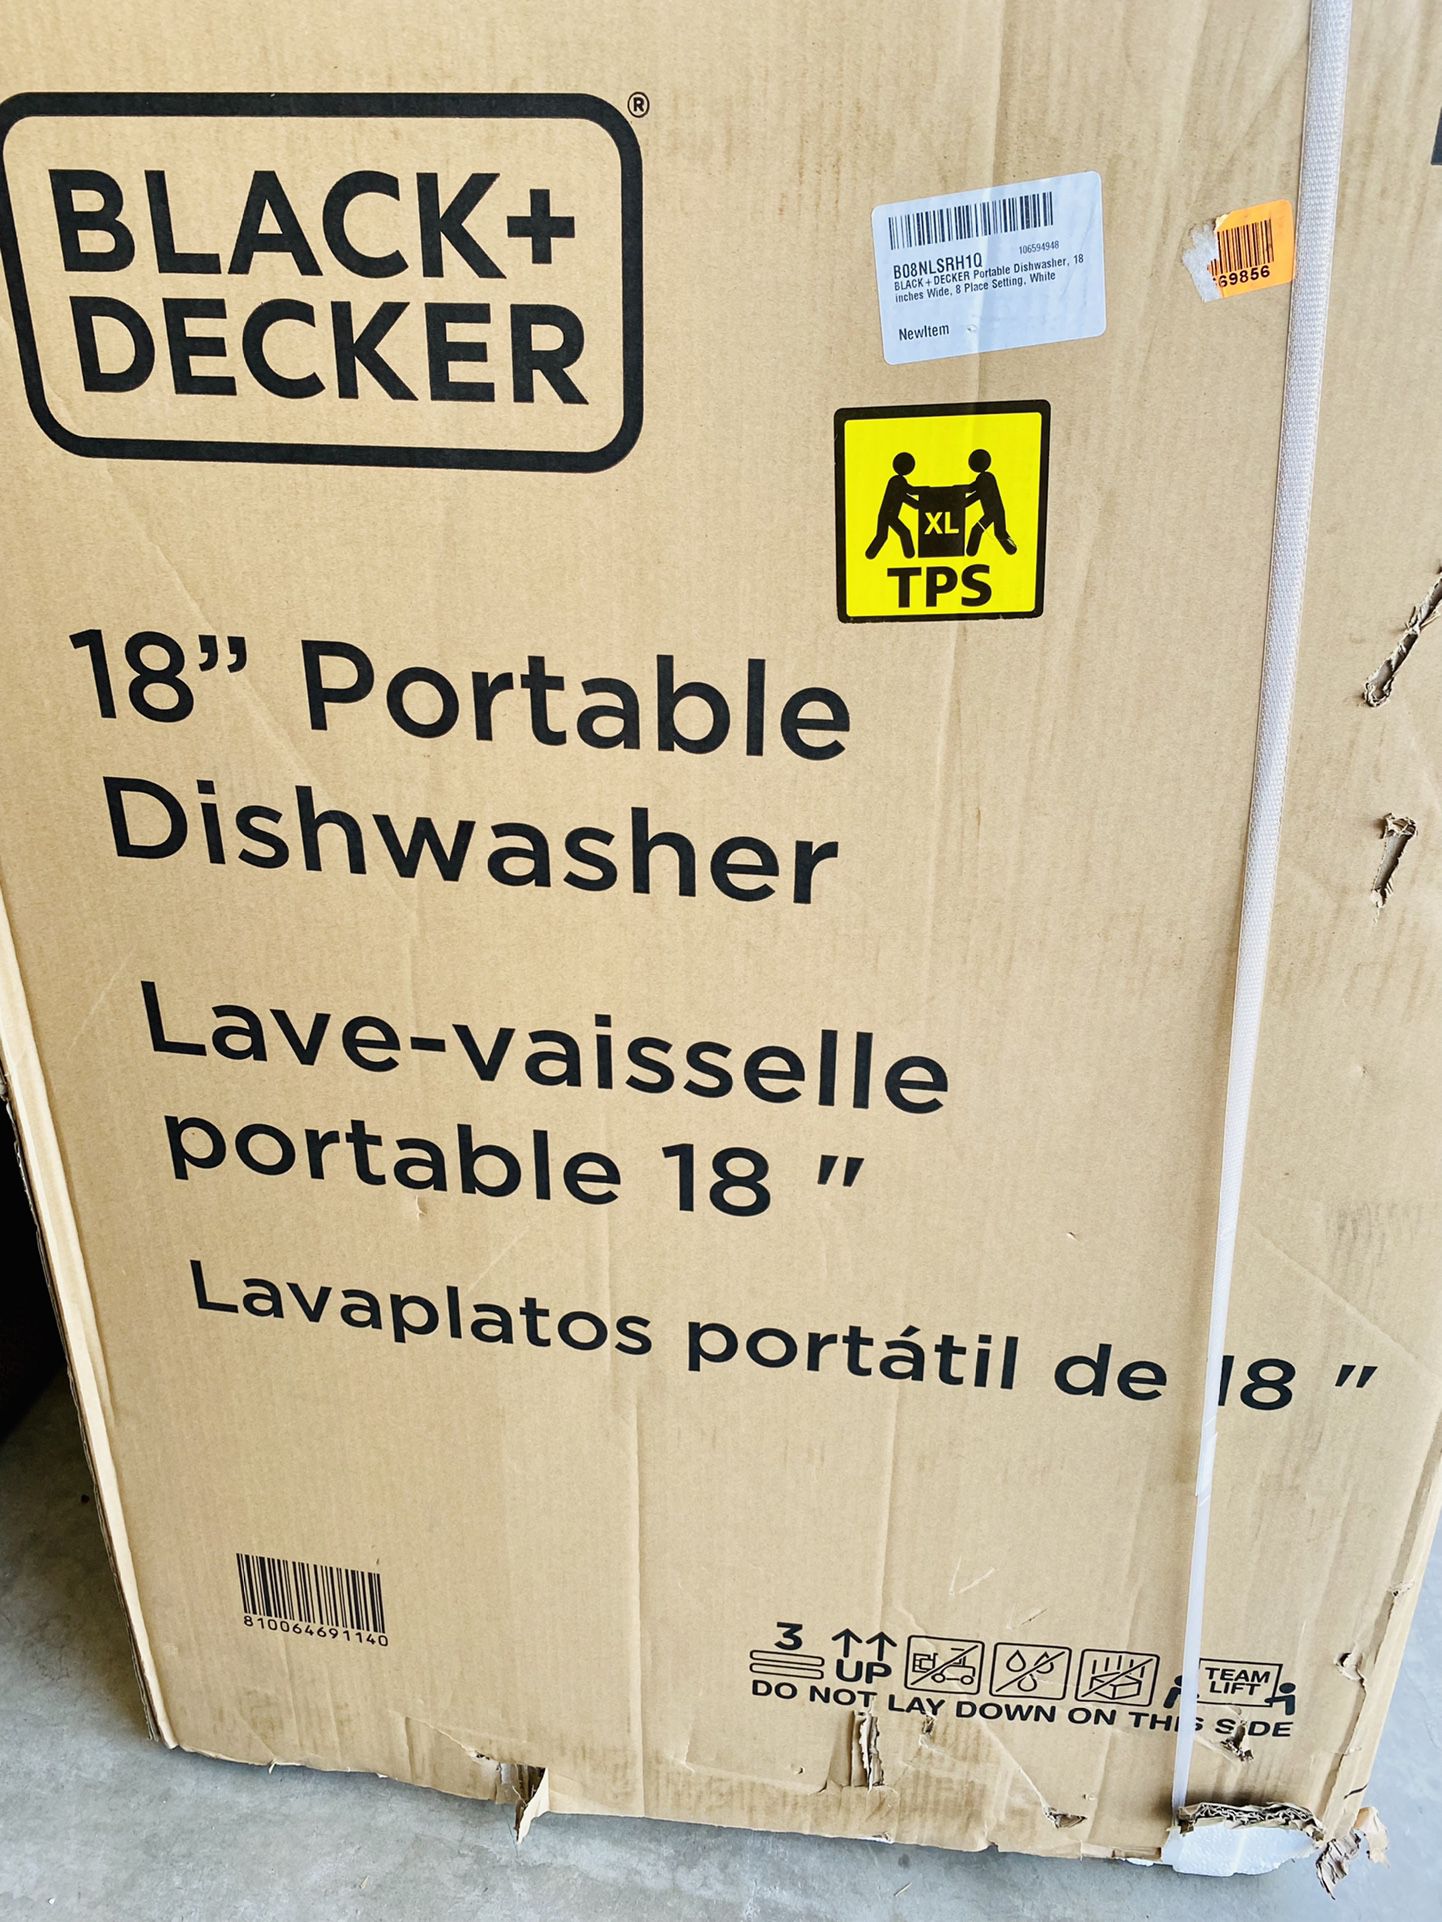  BLACK+DECKER Portable Dishwasher, 18 inches Wide, 8